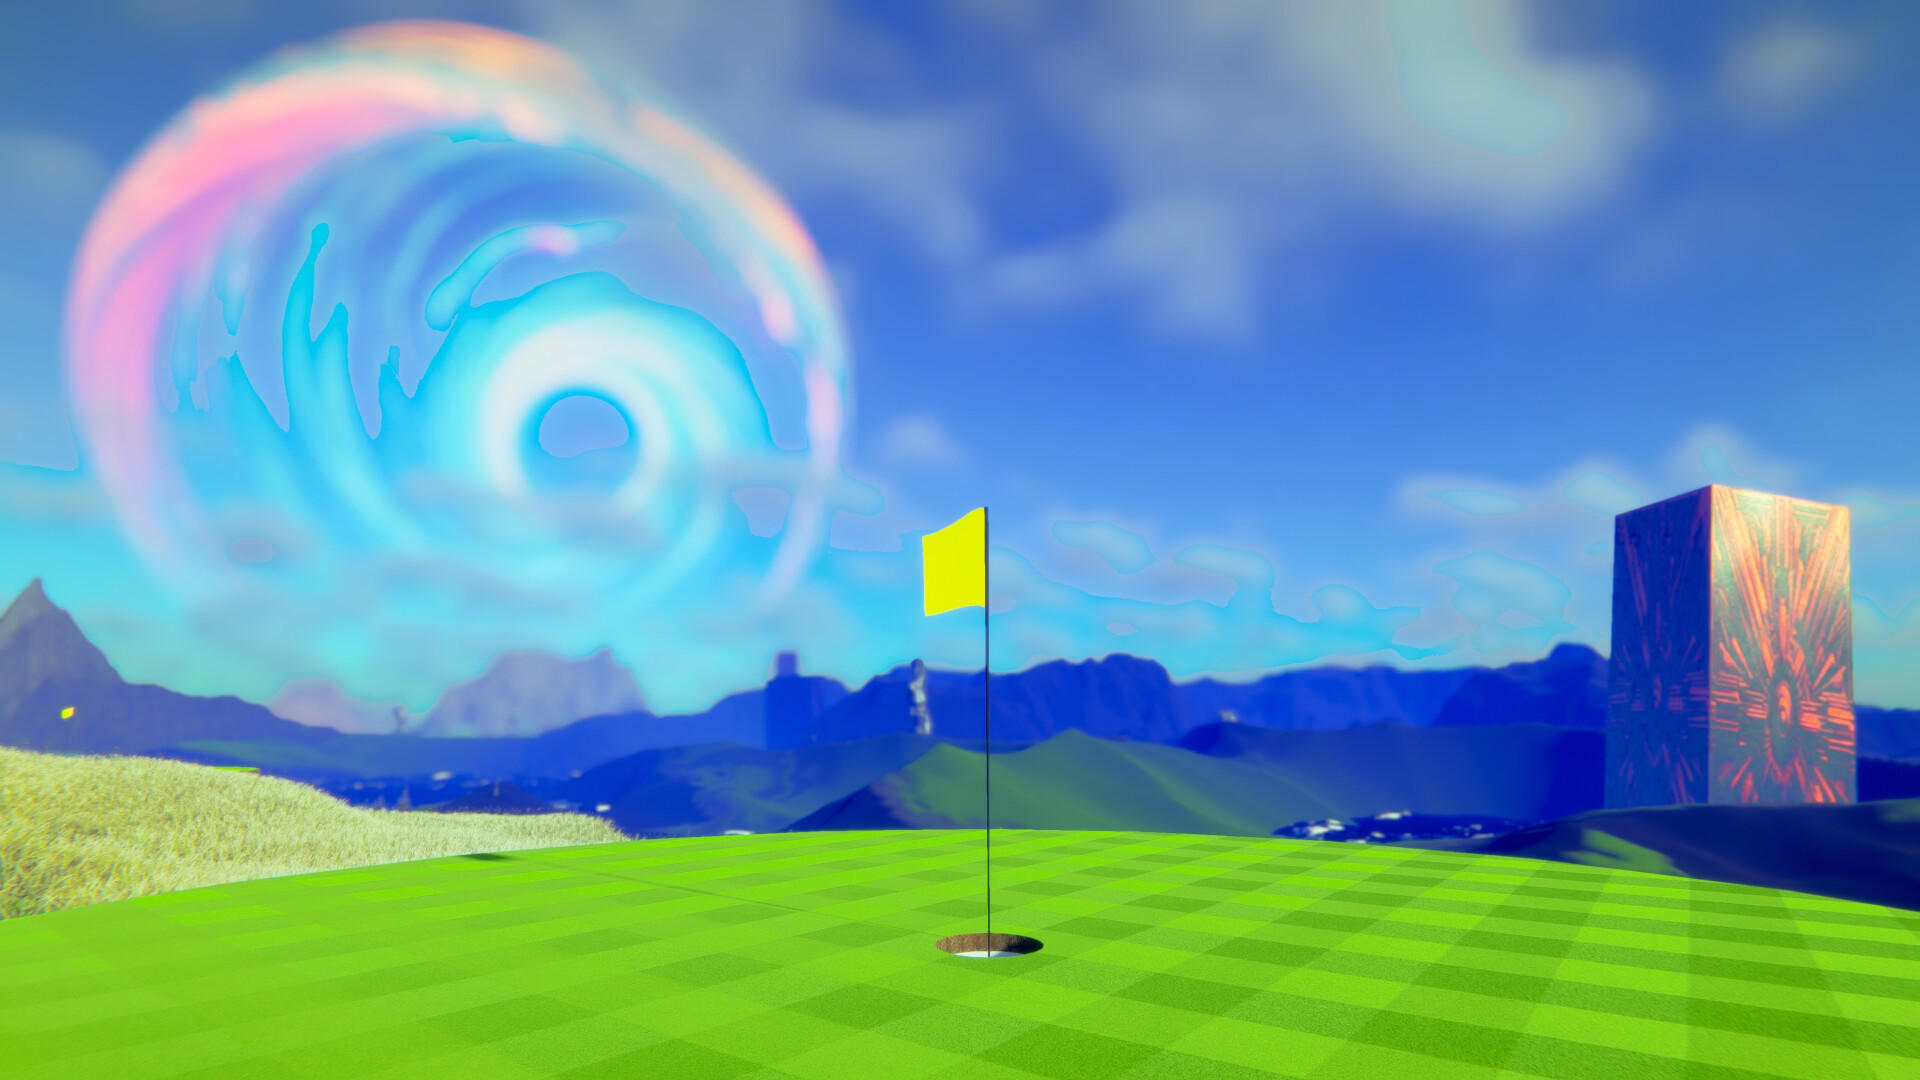 Screenshot 1 of Infinity-Golf 